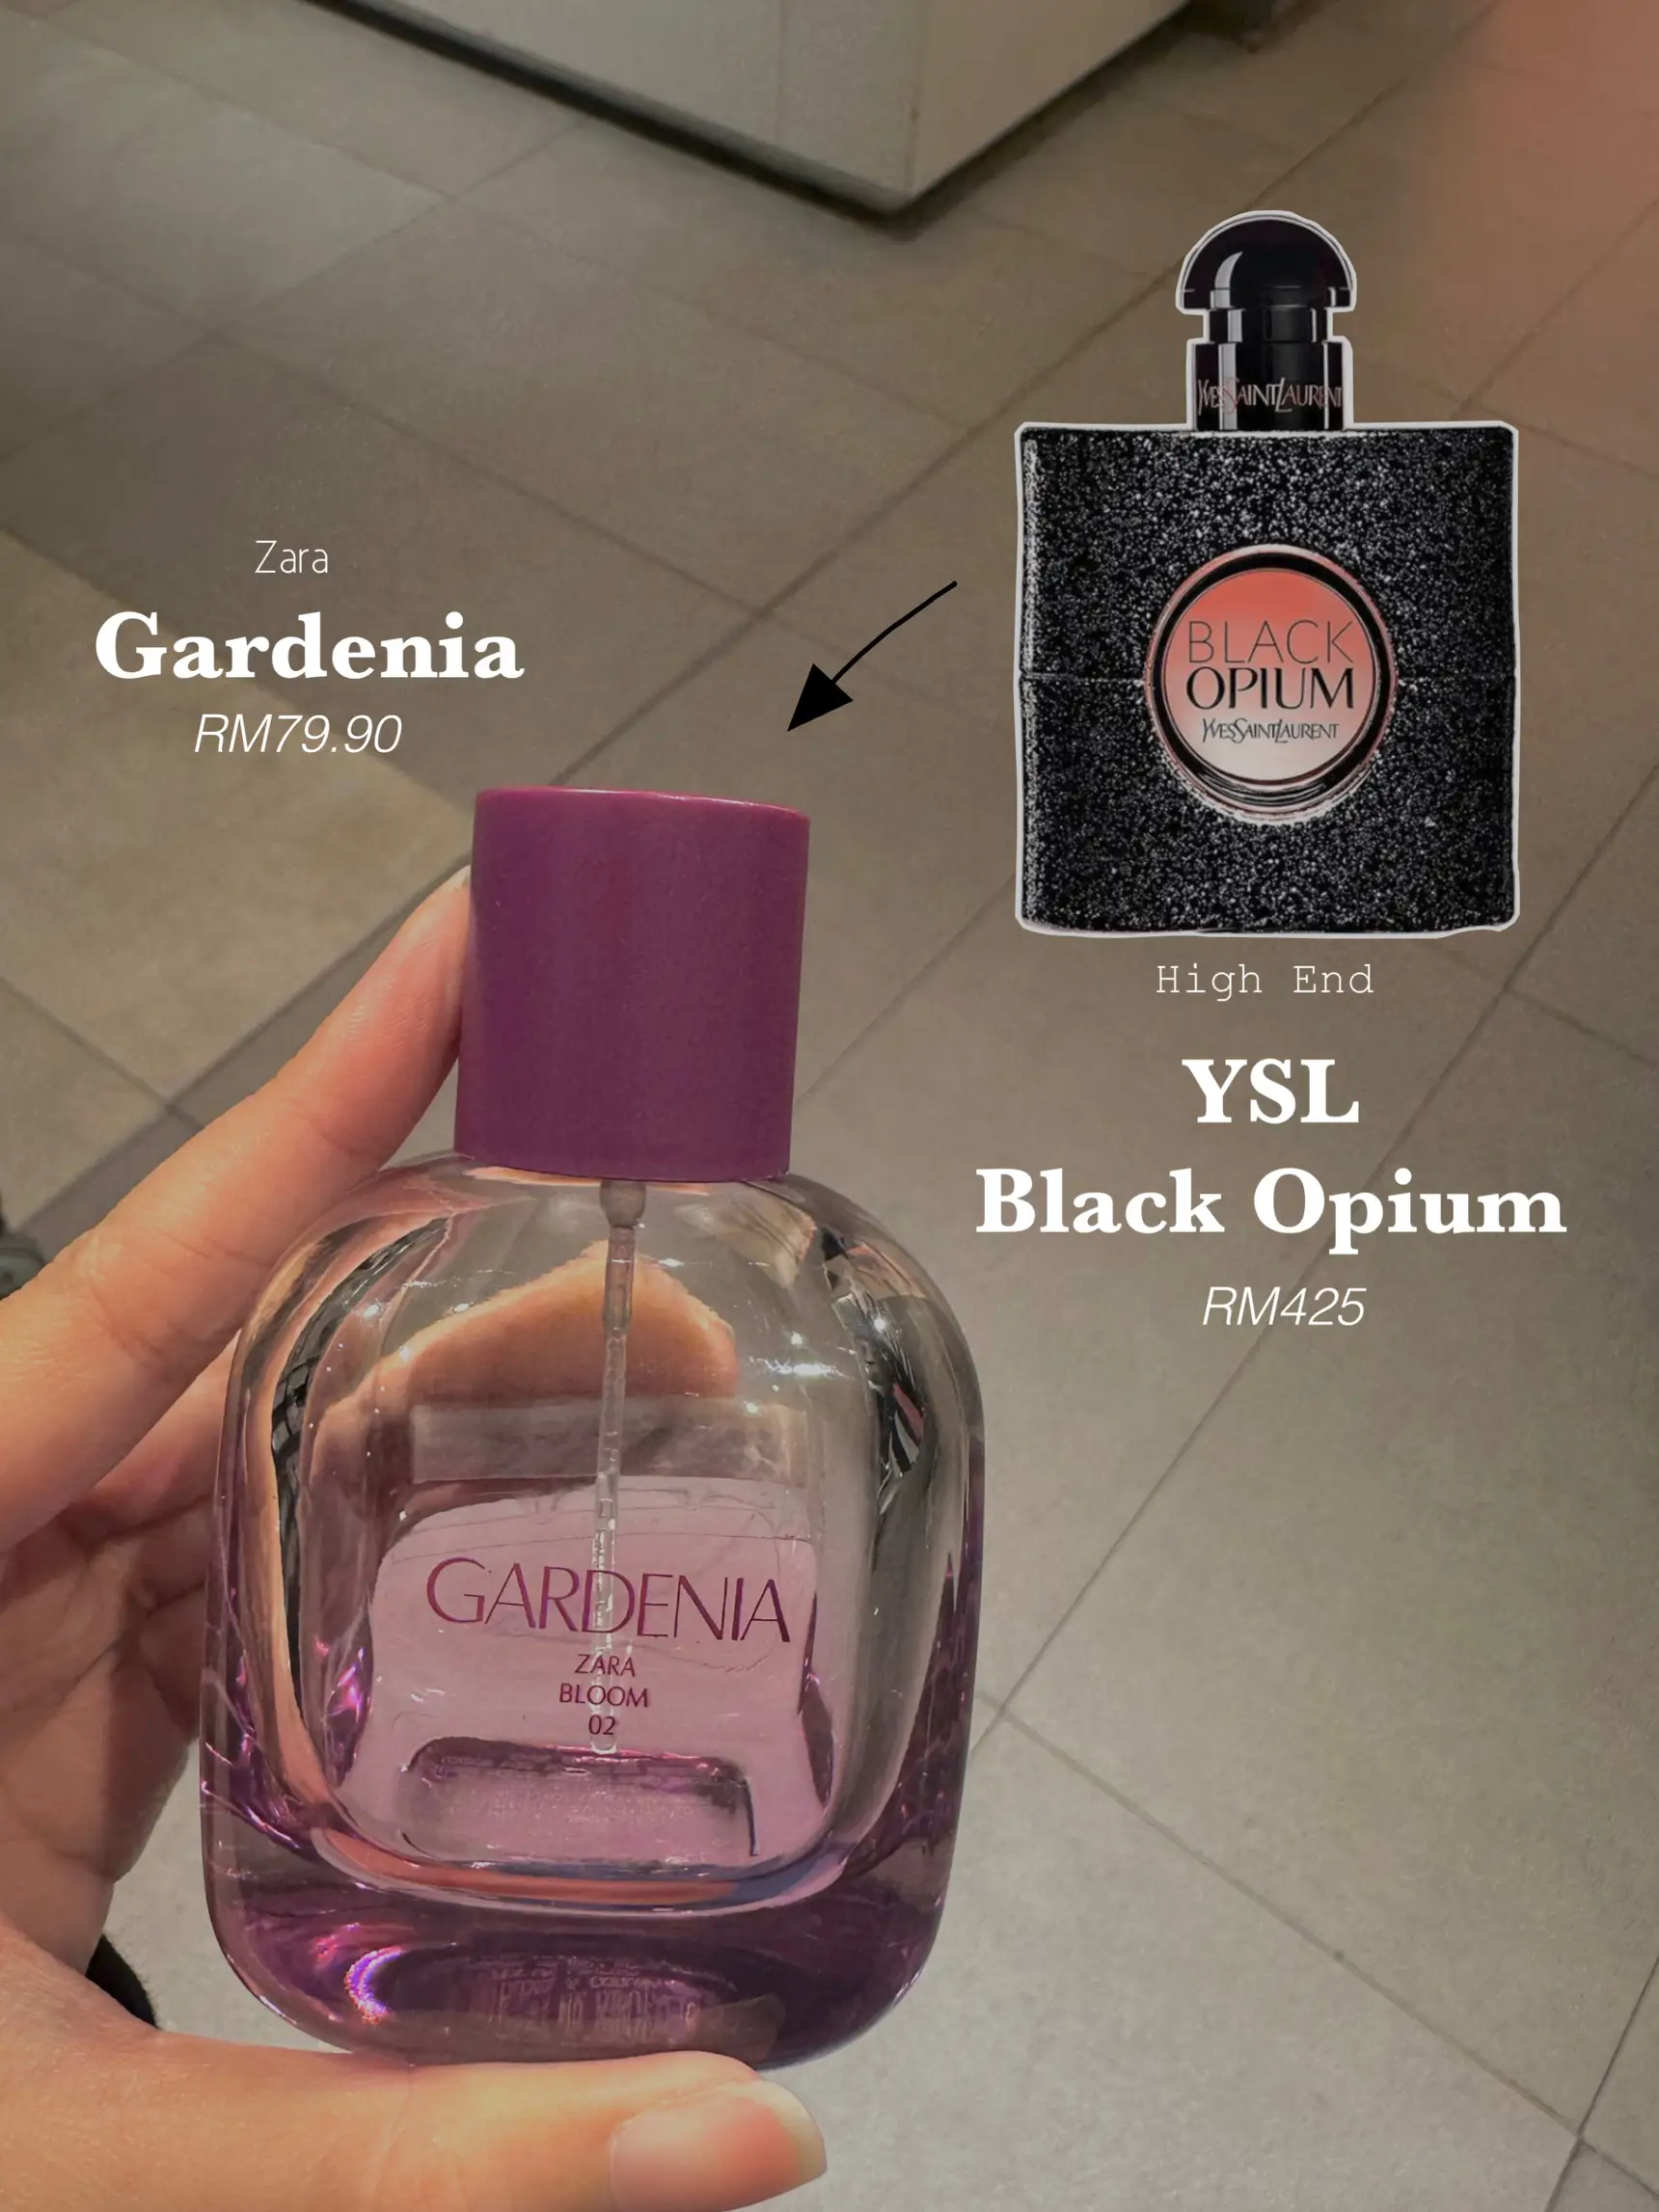 Zara Gardenia (Dupe for YSL Black Opium)